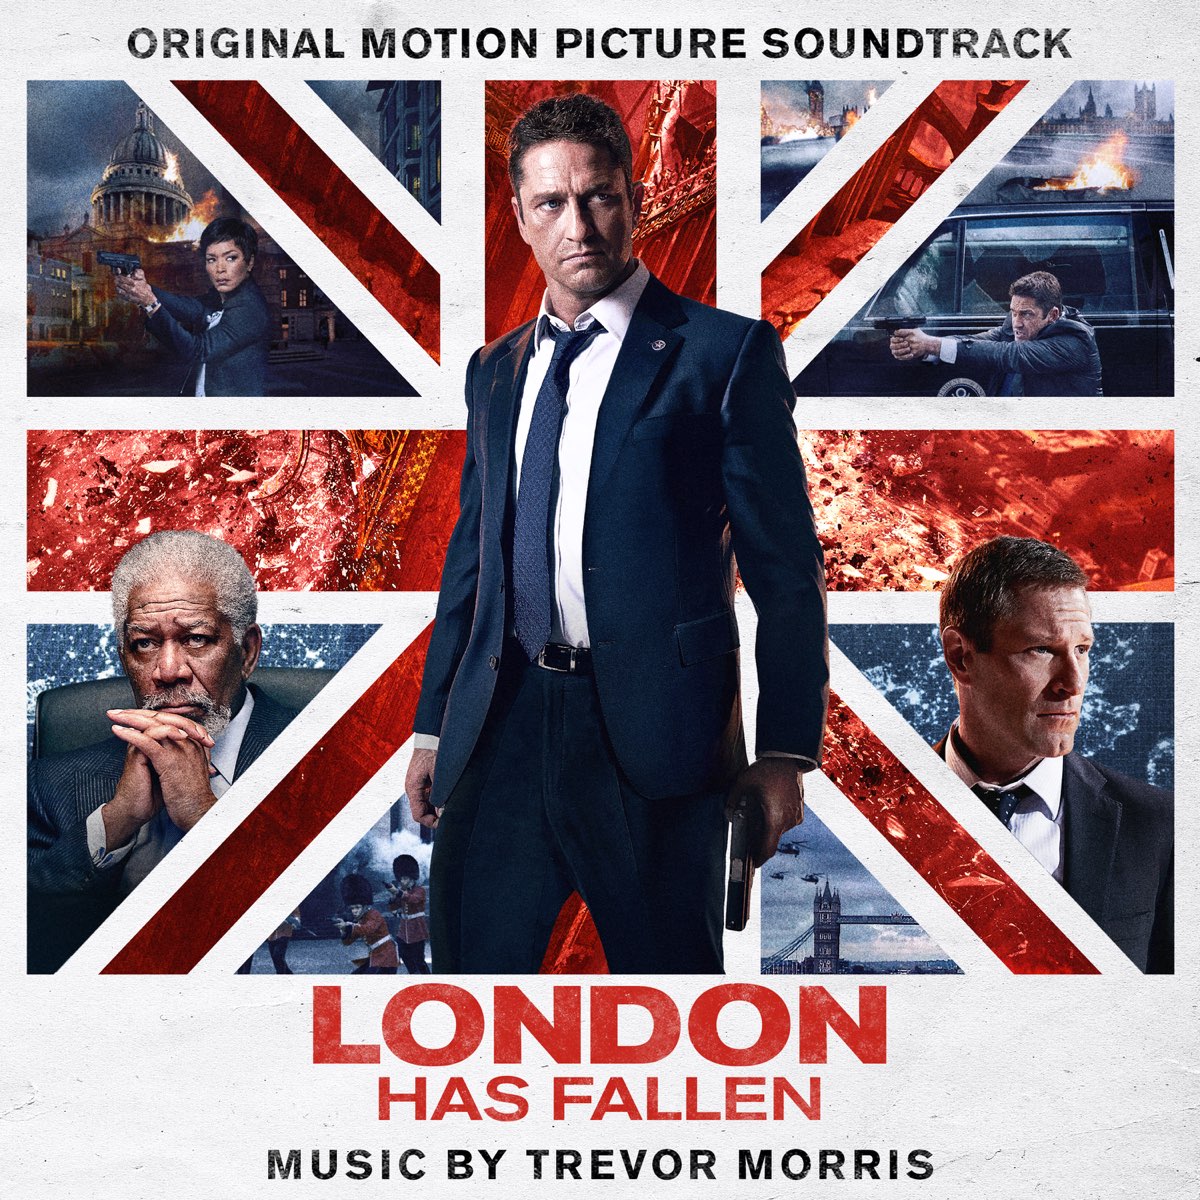 Fallen soundtrack. Морган Фримен падение Лондона. Падение Лондона / London has Fallen (2016). Падение Лондона Постер.